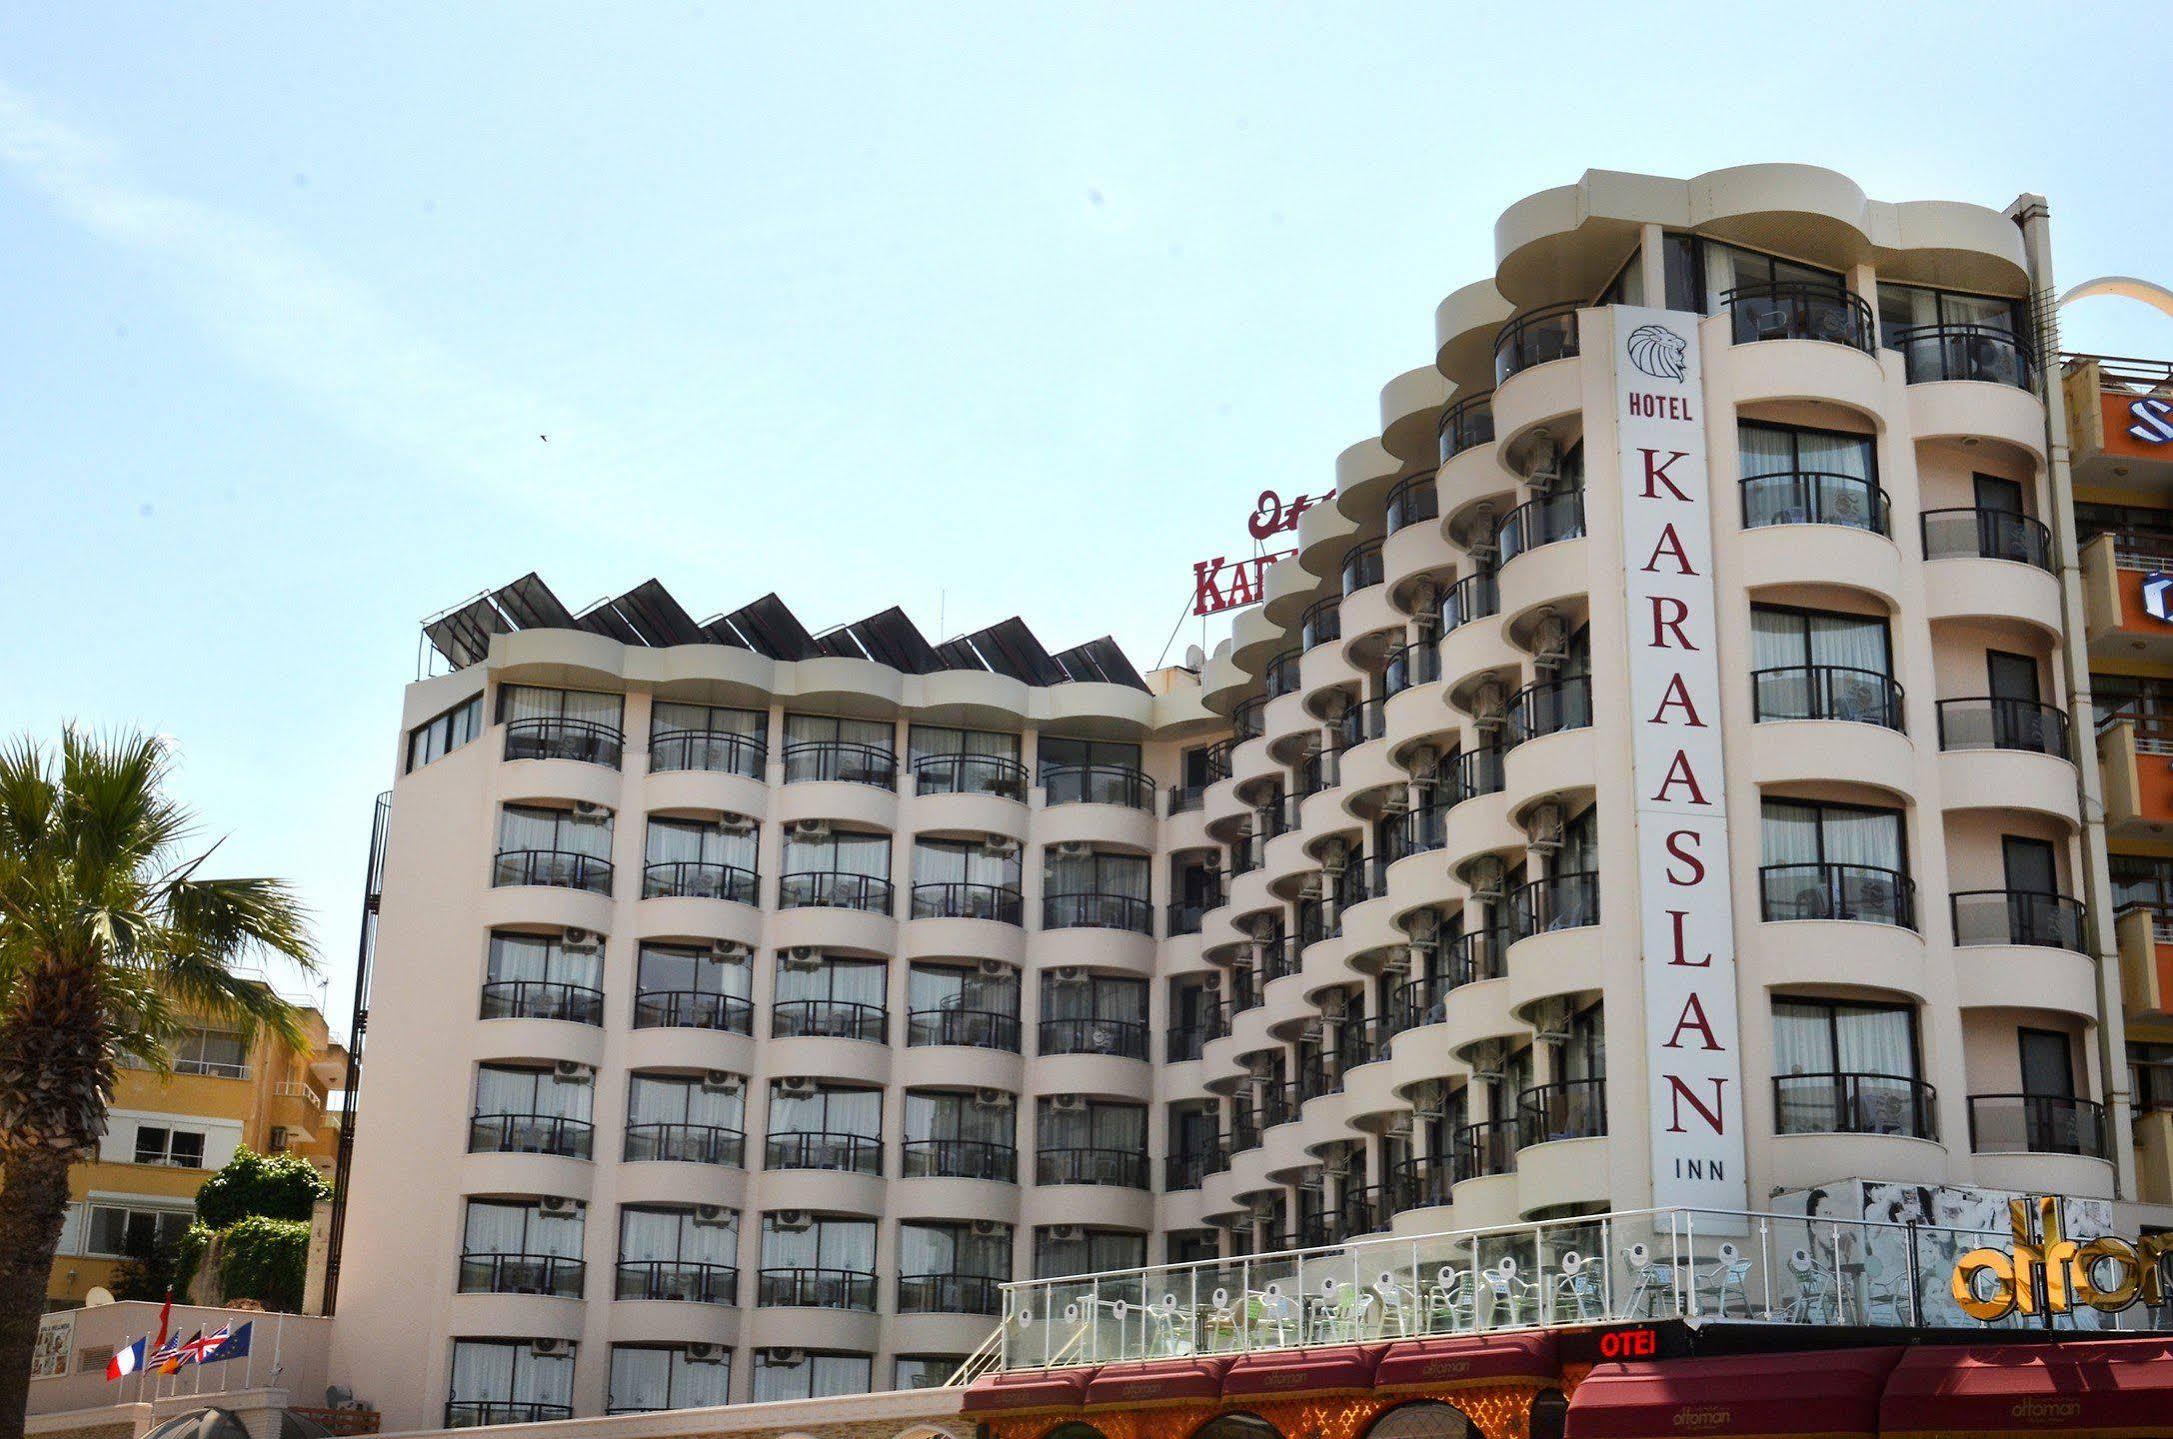 By Karaaslan Inn (Hotel by Karaaslan Inn)